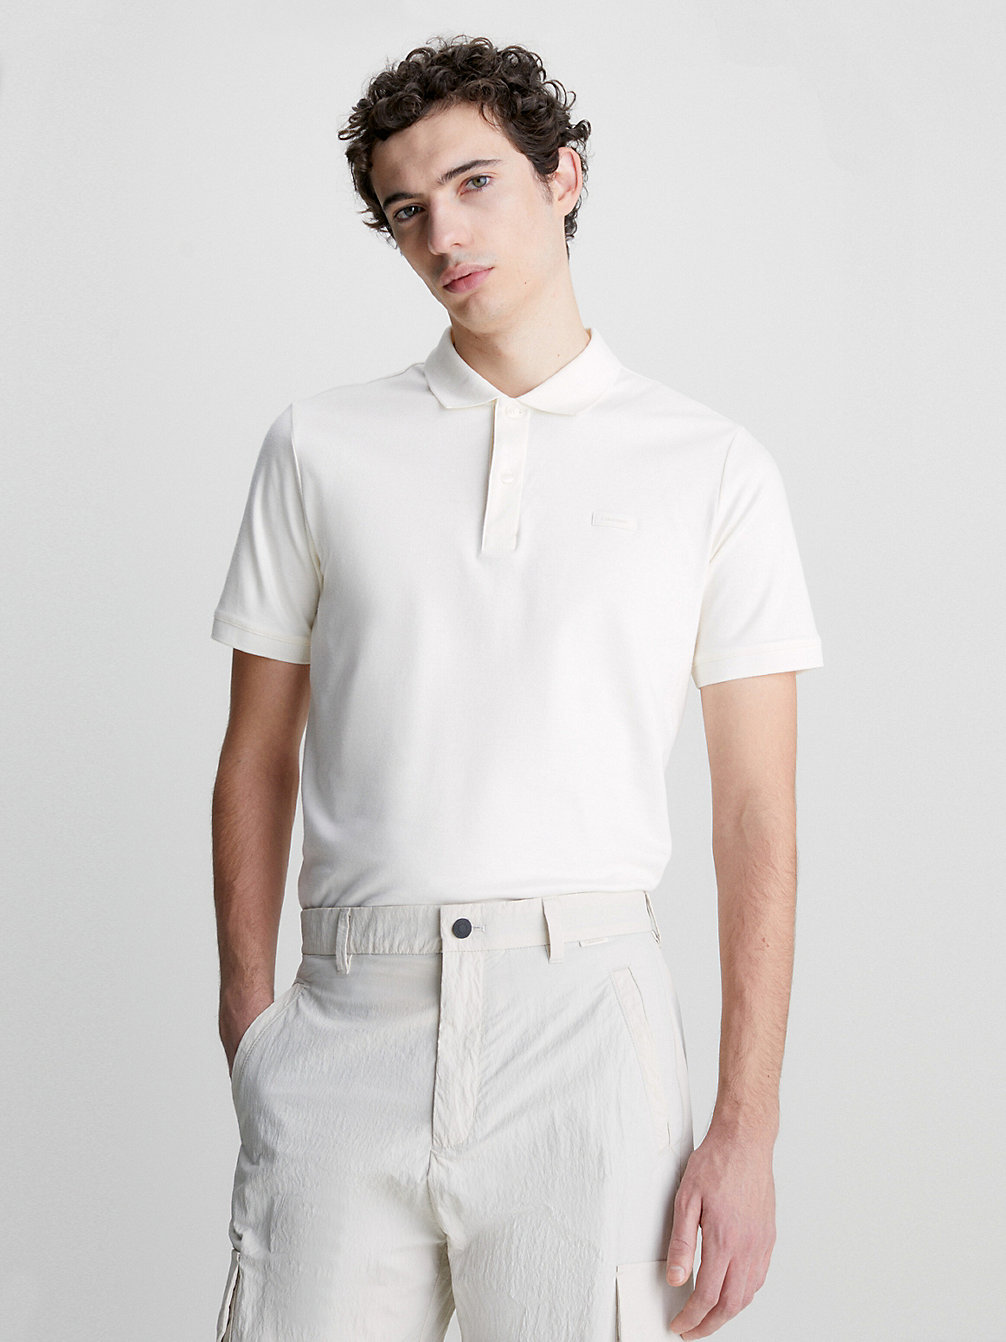 EGRET > Wąska Koszulka Polo > undefined Mężczyźni - Calvin Klein